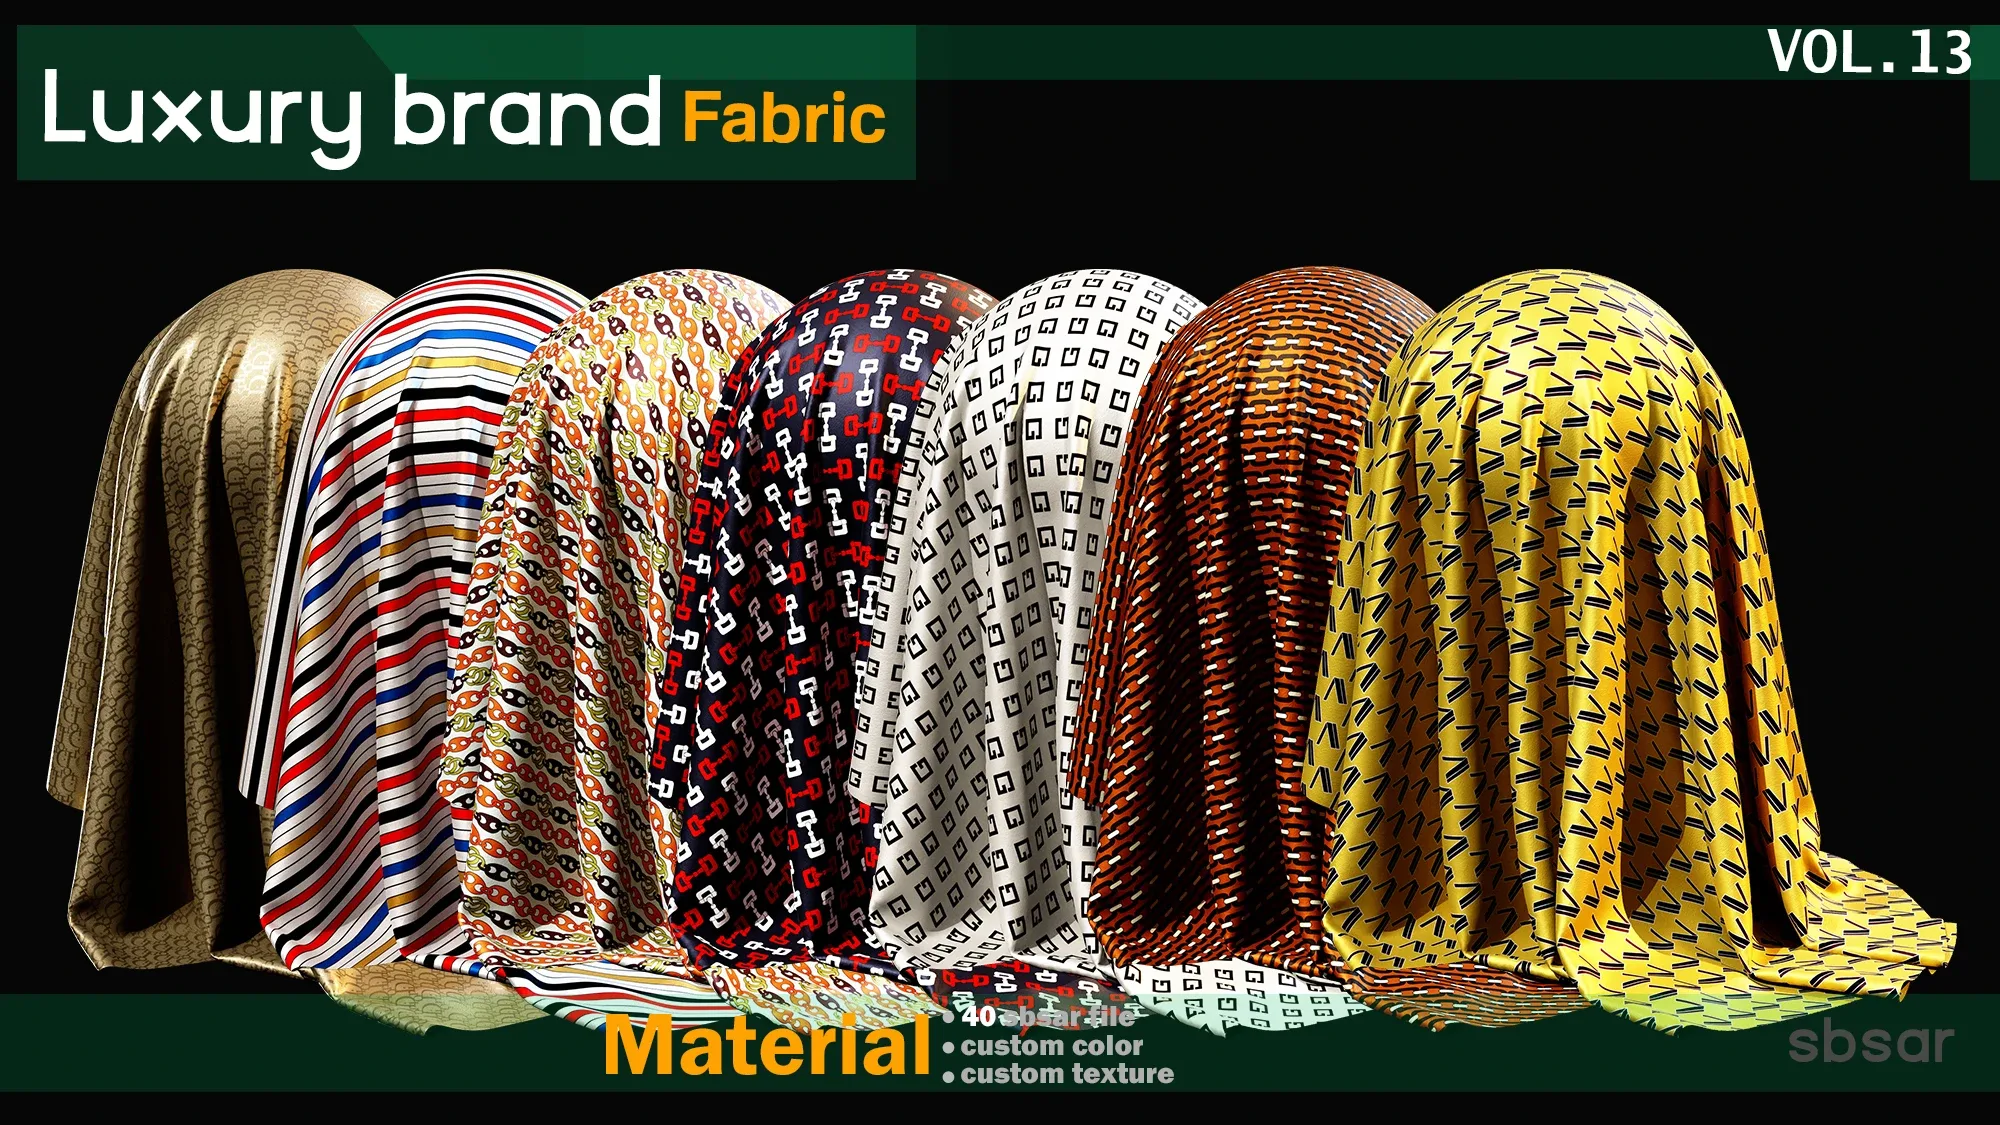 50 Luxury brand fabric Material -SBSAR -custom color -custom fabric -VOL 13